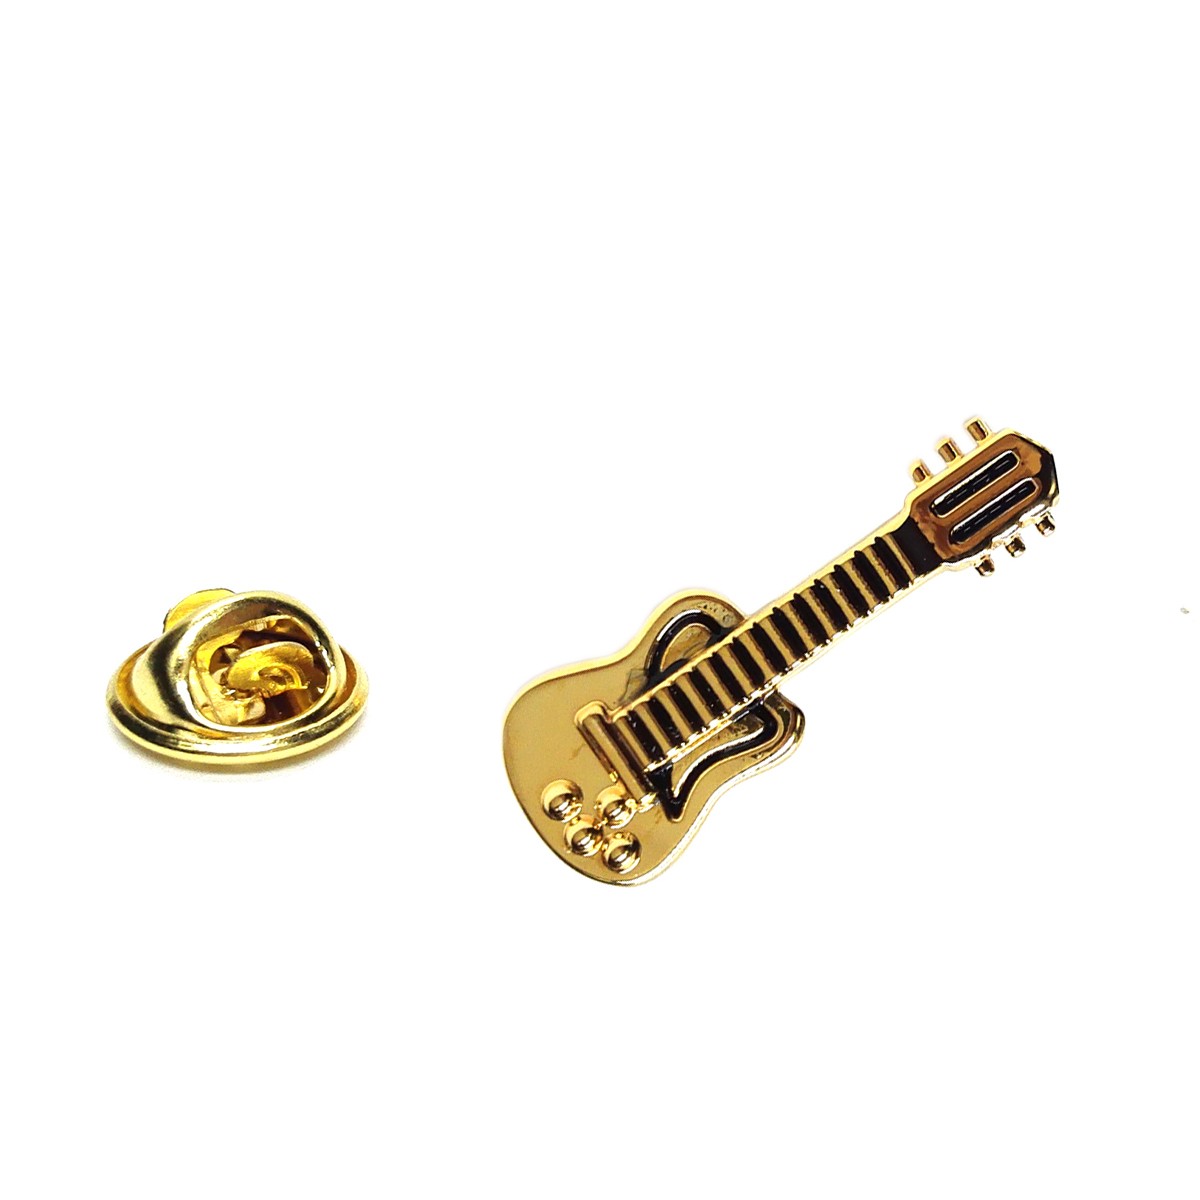 Pin Badge Electric Guitar Gold Gift